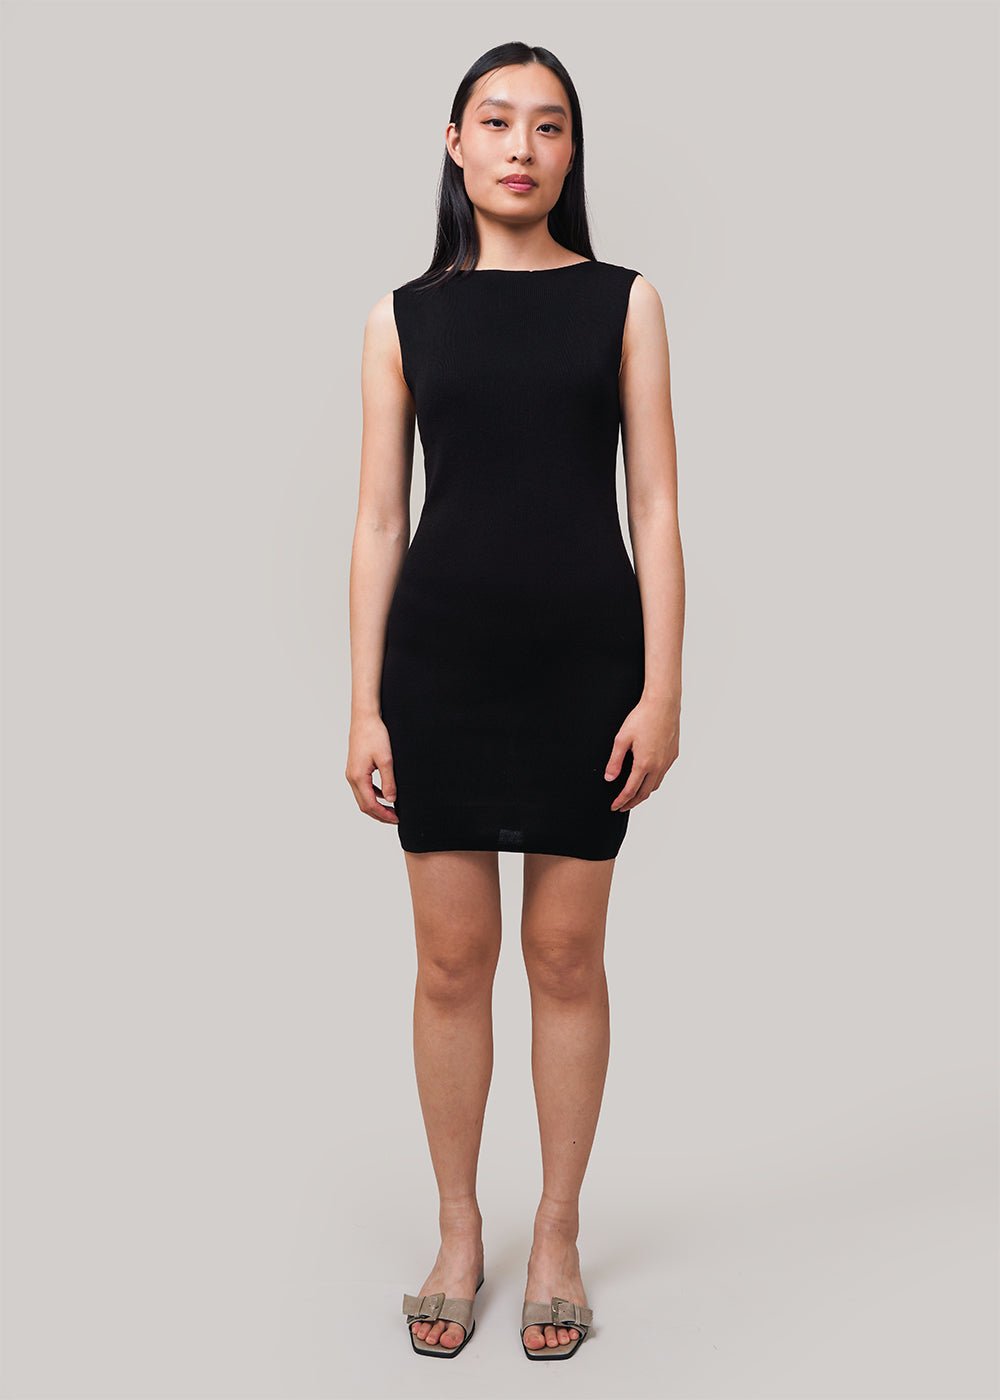 St. Agni Black Vas Knit Mini Dress - New Classics Studios Sustainable Ethical Fashion Canada